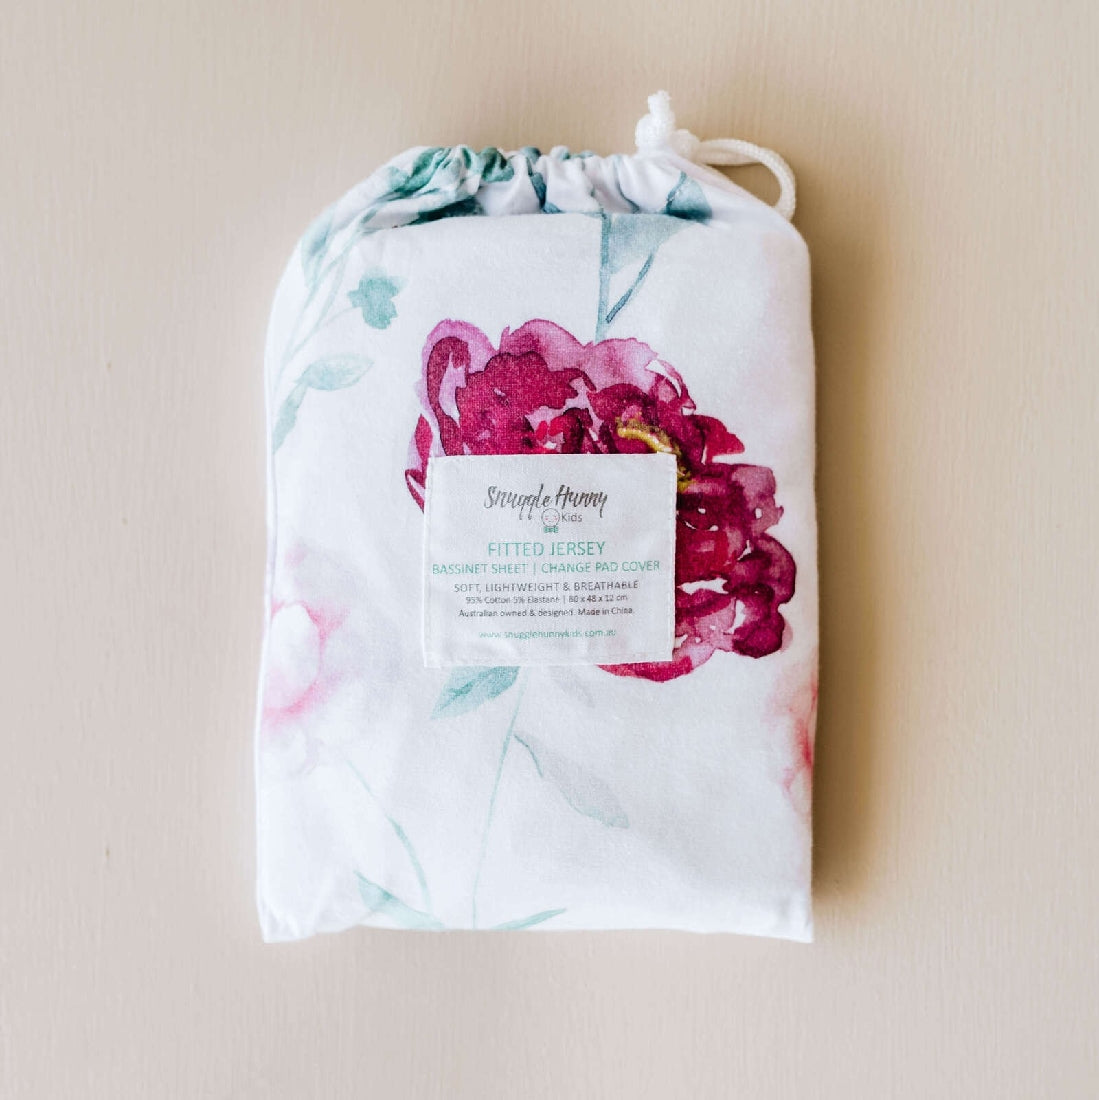 Lilac Skies | Snuggle Hunny Bassinet Sheet / Change Pad Cover